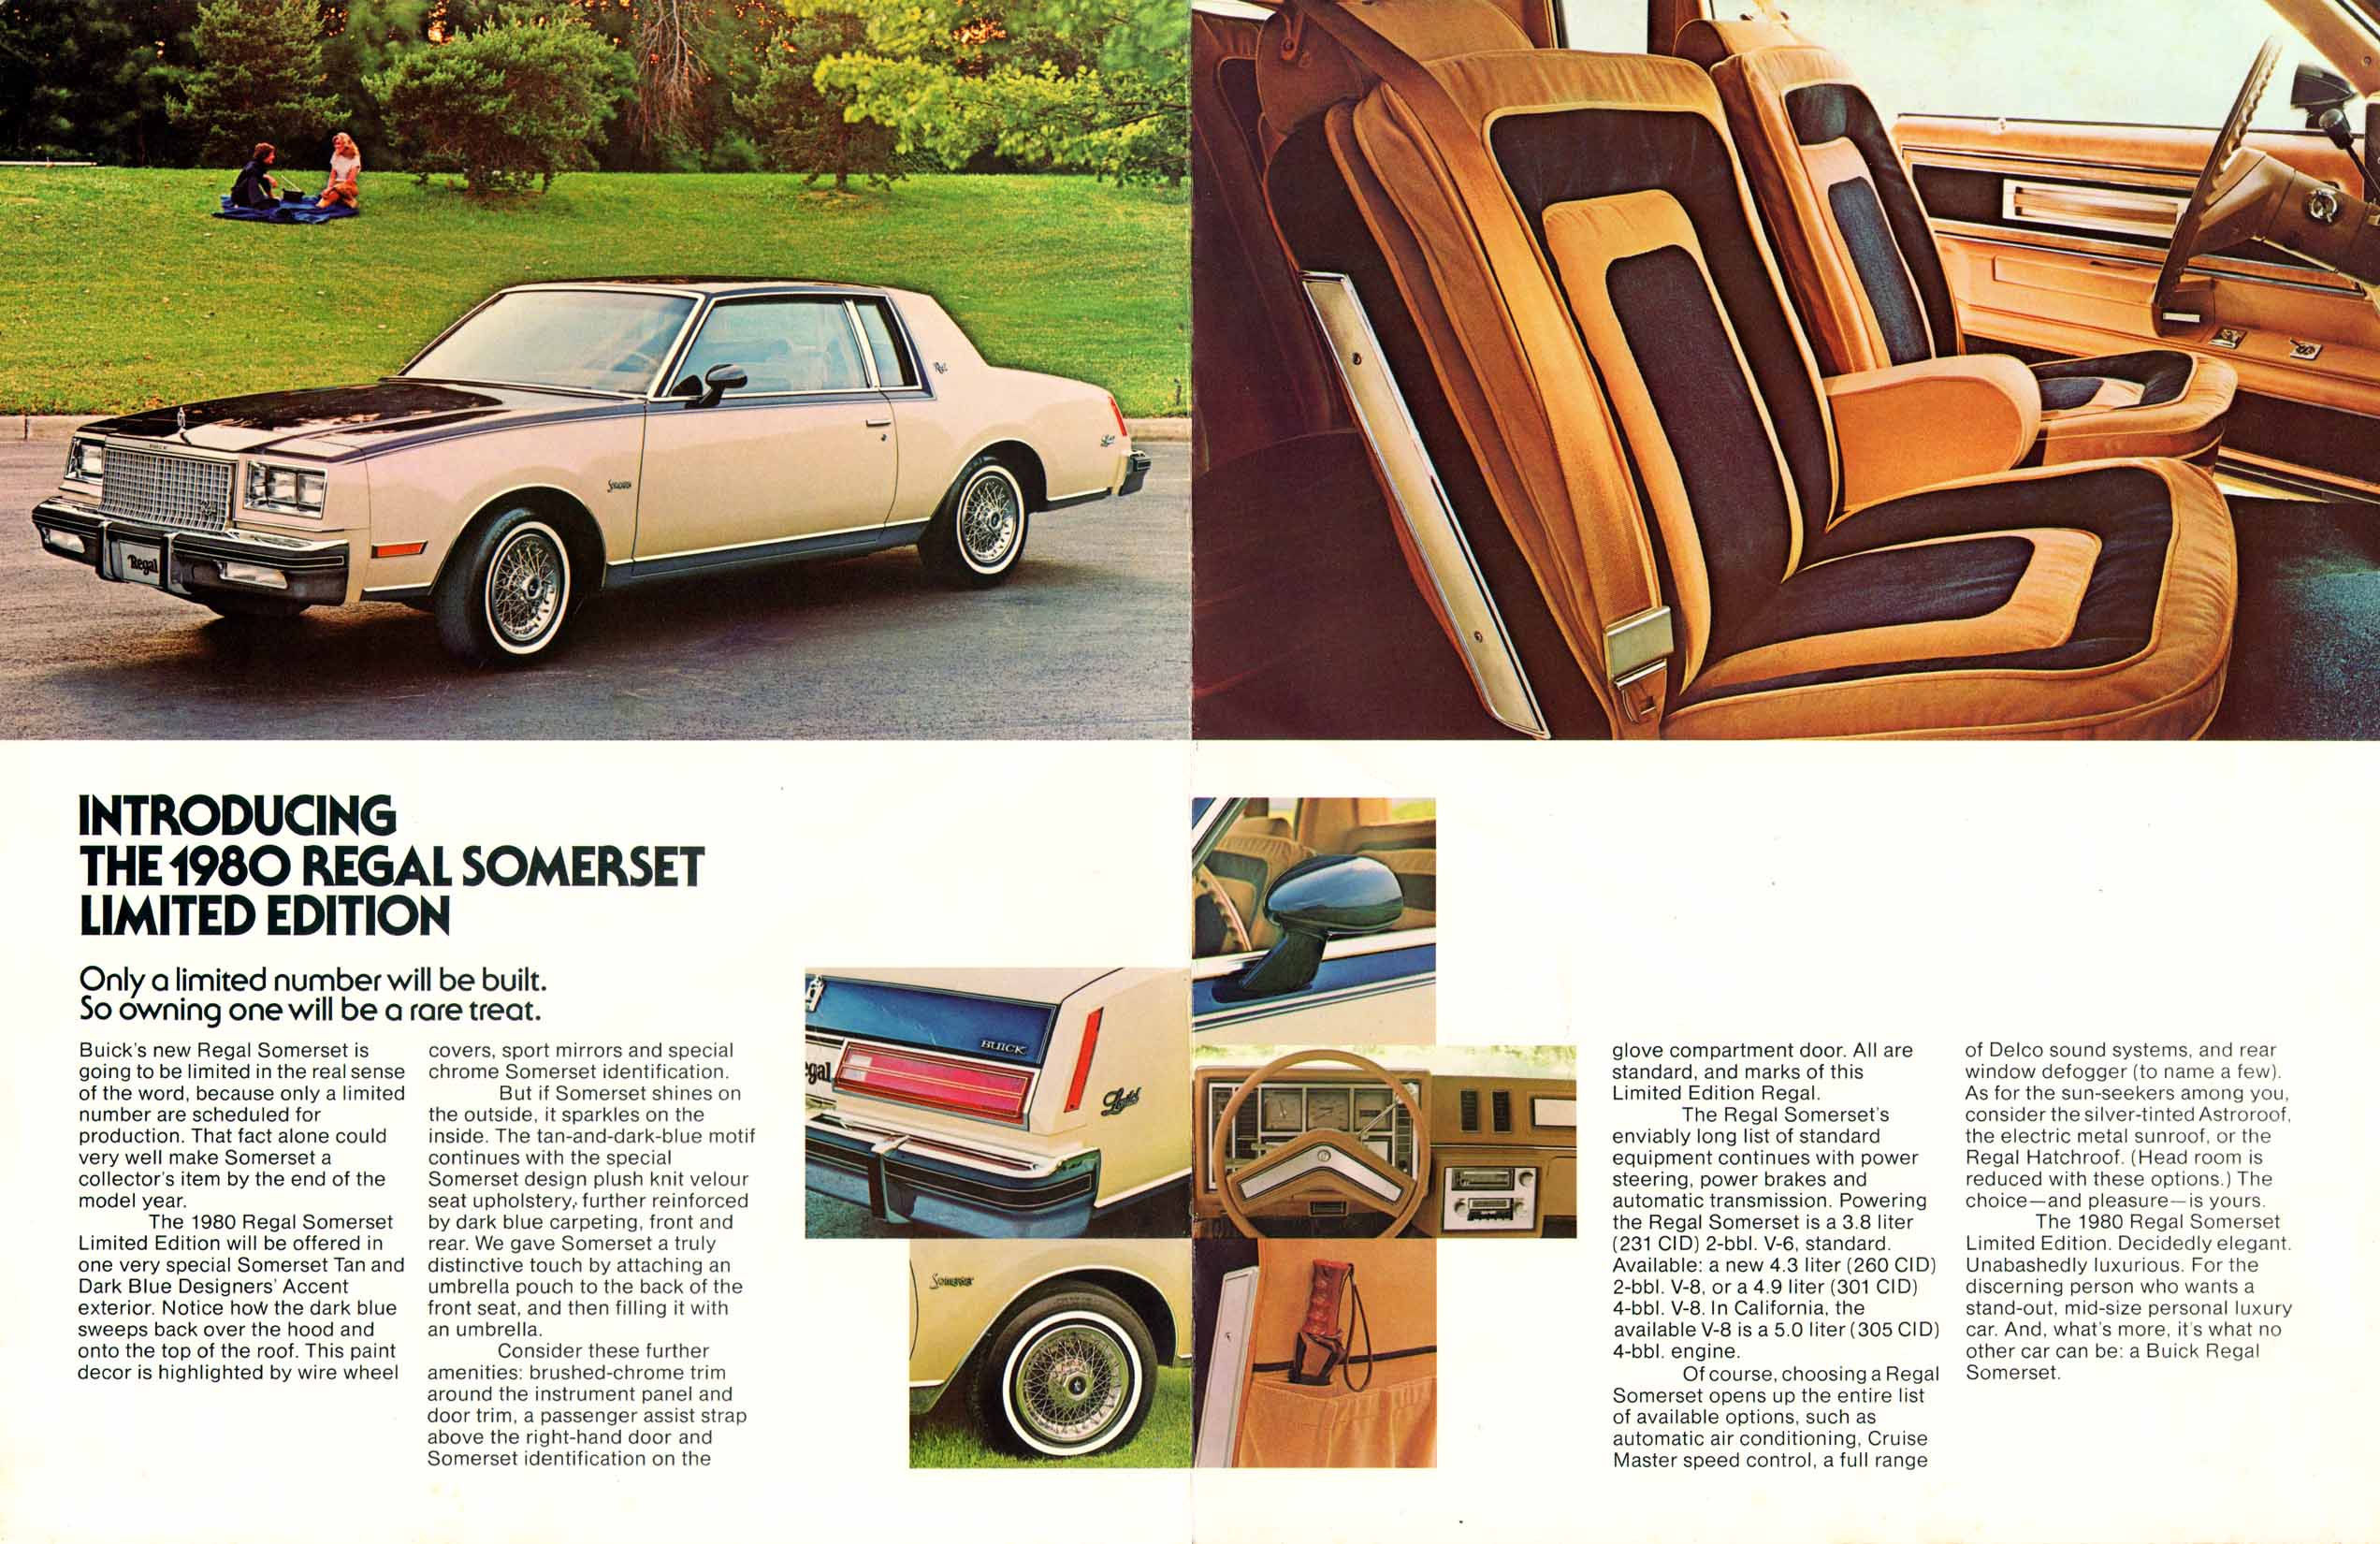 1980 Buick Regal Somerset Folder-02-03